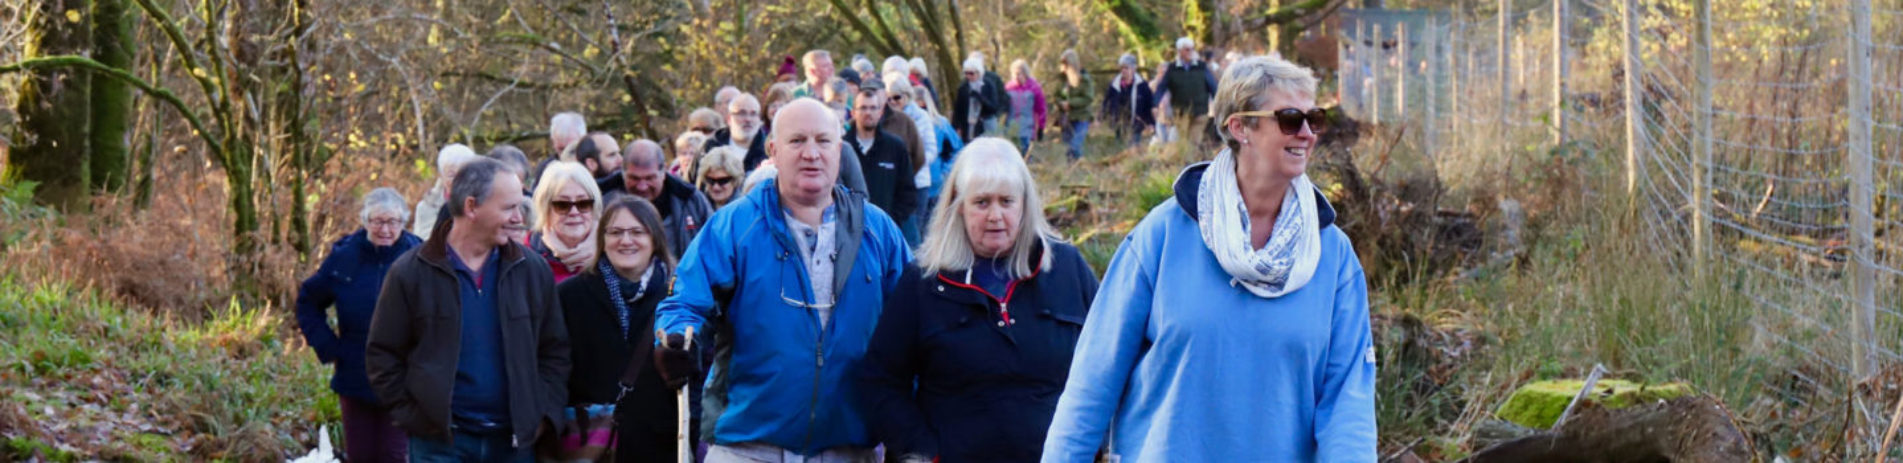 members-of-lochgoil-community-walking-in-woods